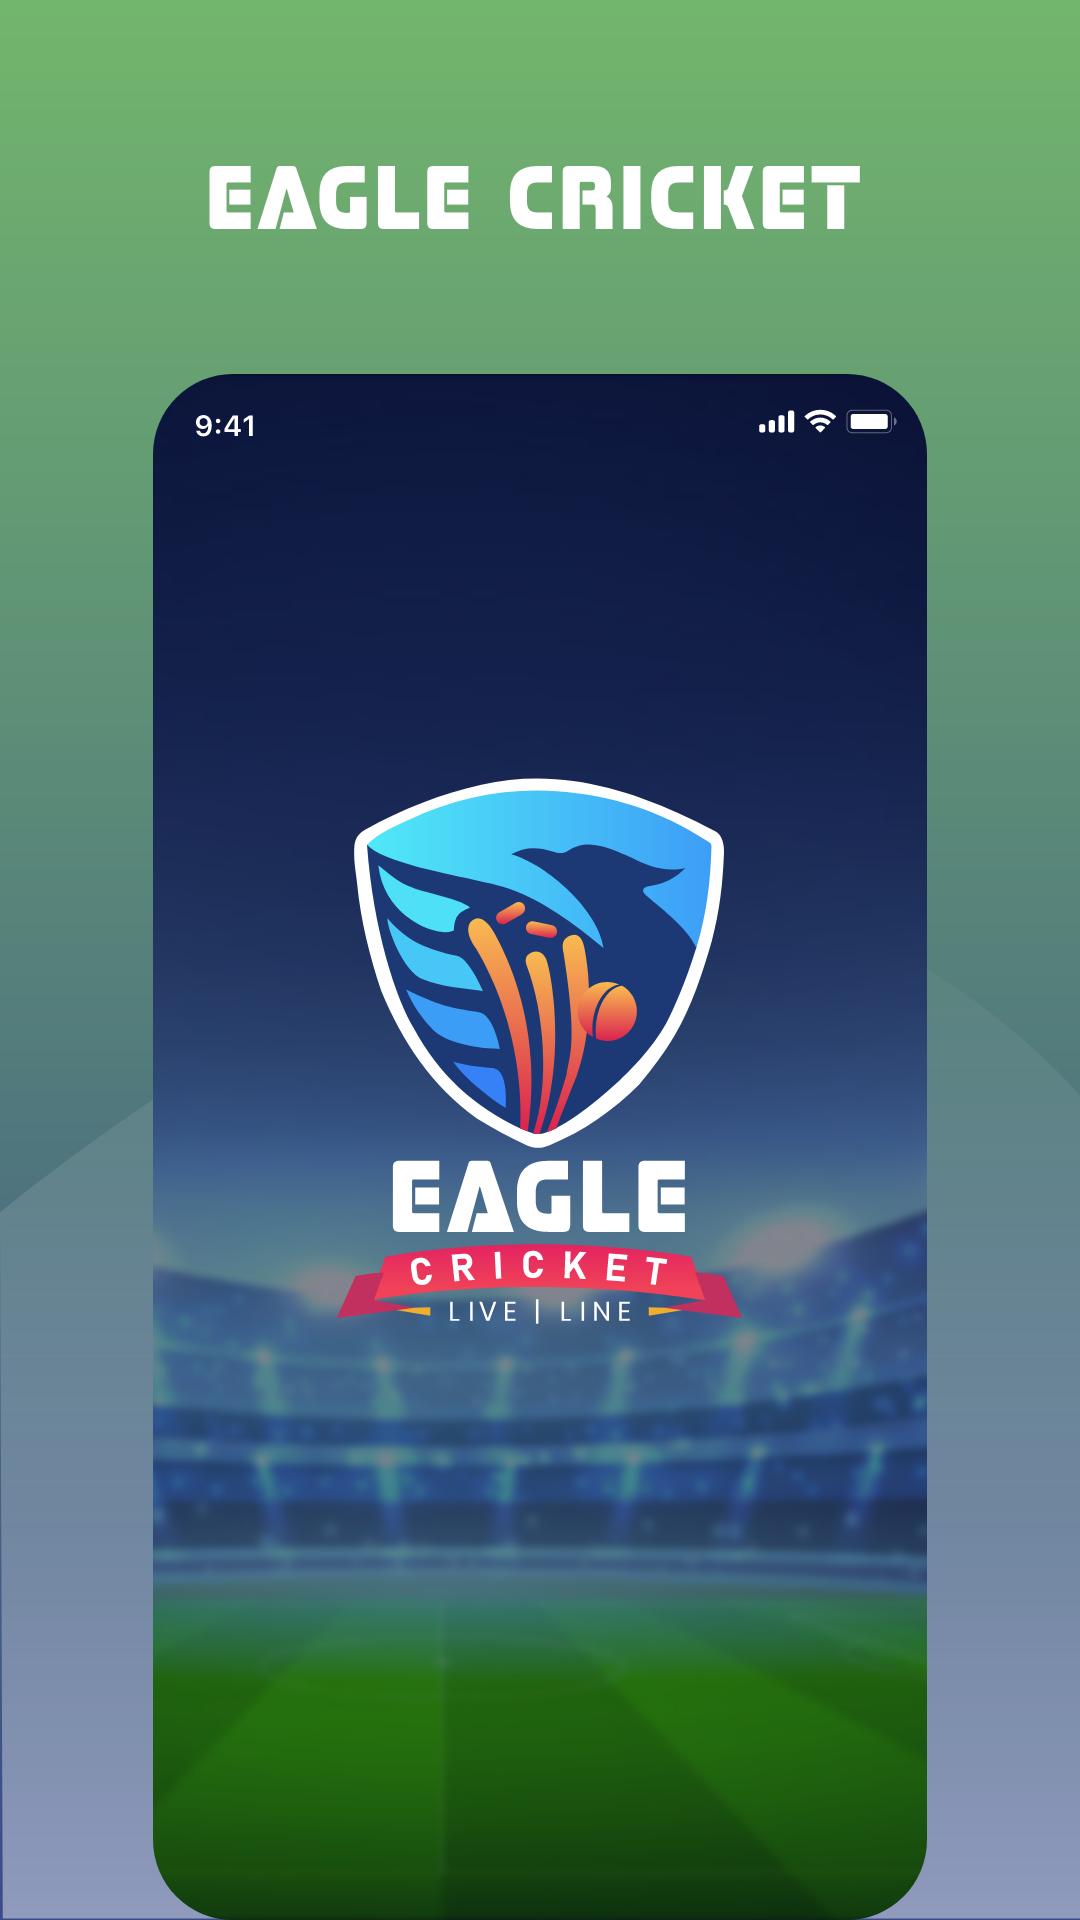 Eagle Cricket Live Line cricket scorecard live 1.3 Screenshot 2